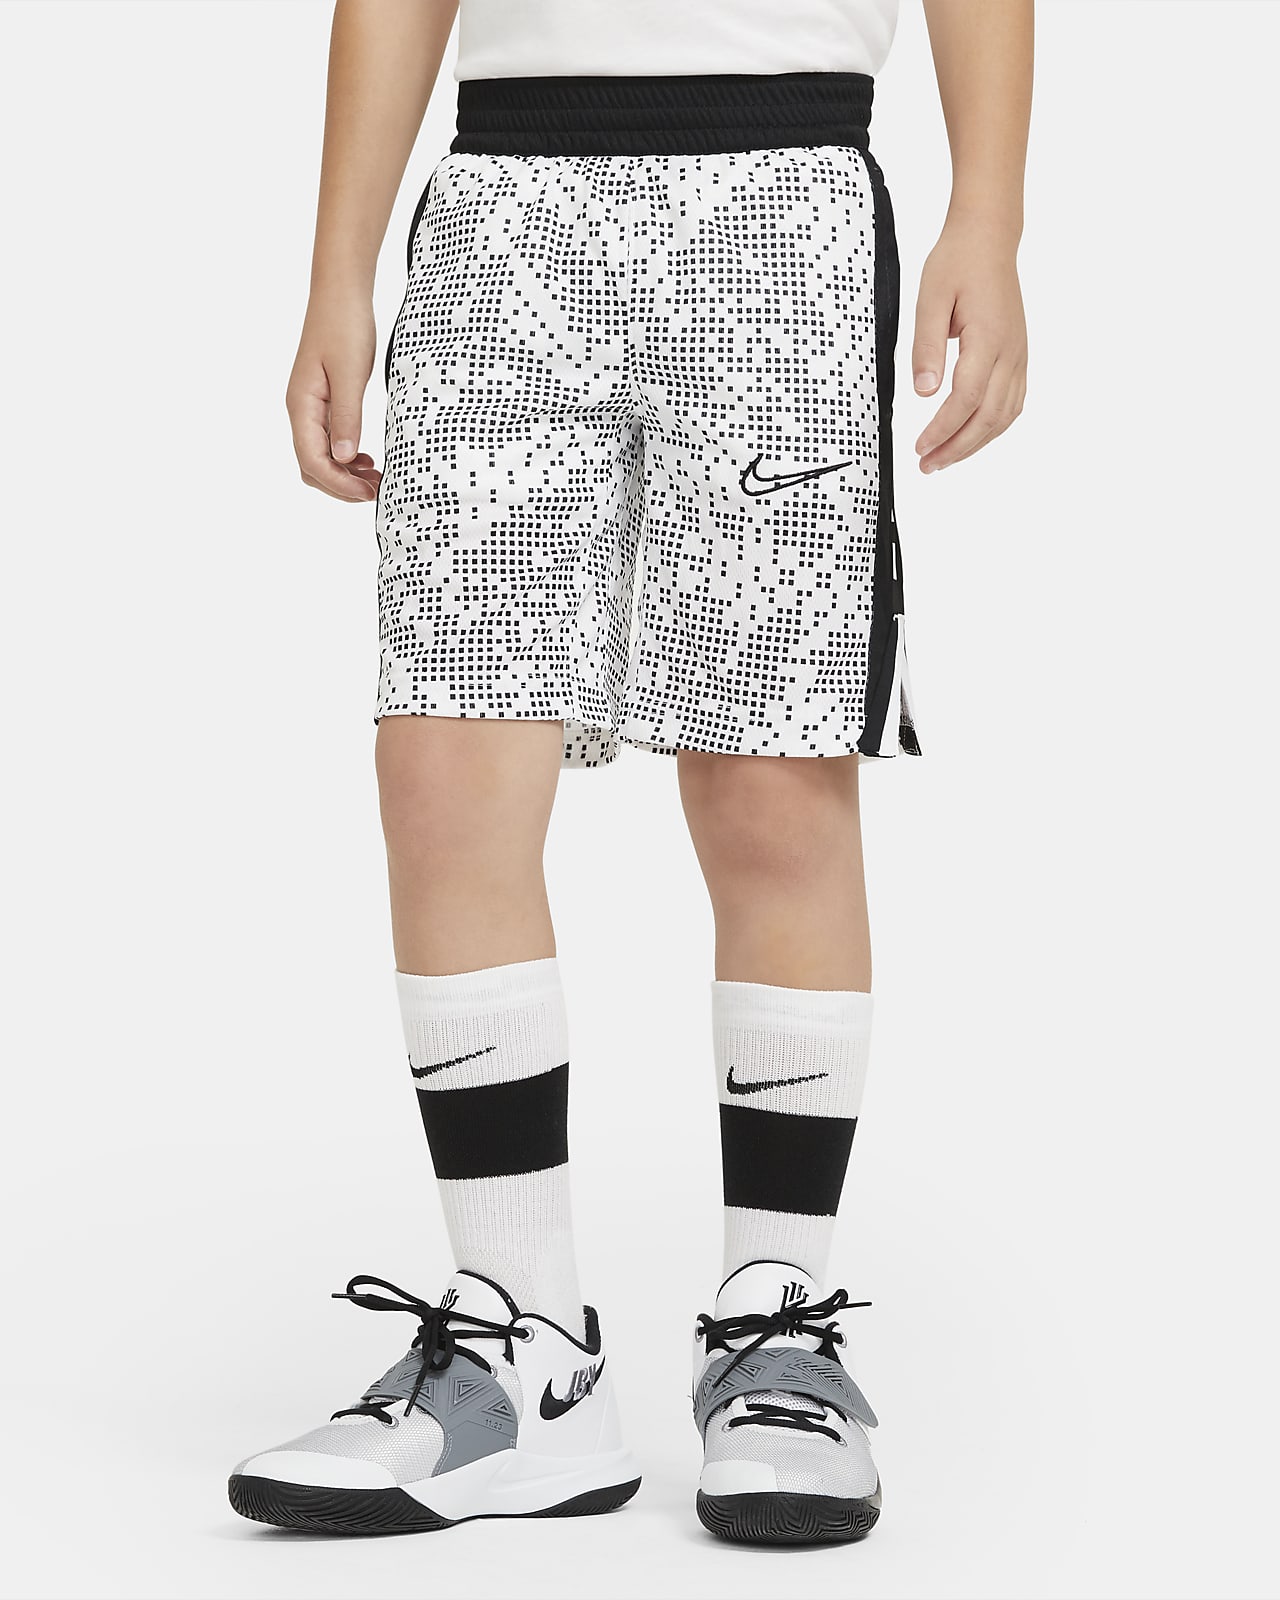 Buy > nike elite basketball shorts youth > in stock